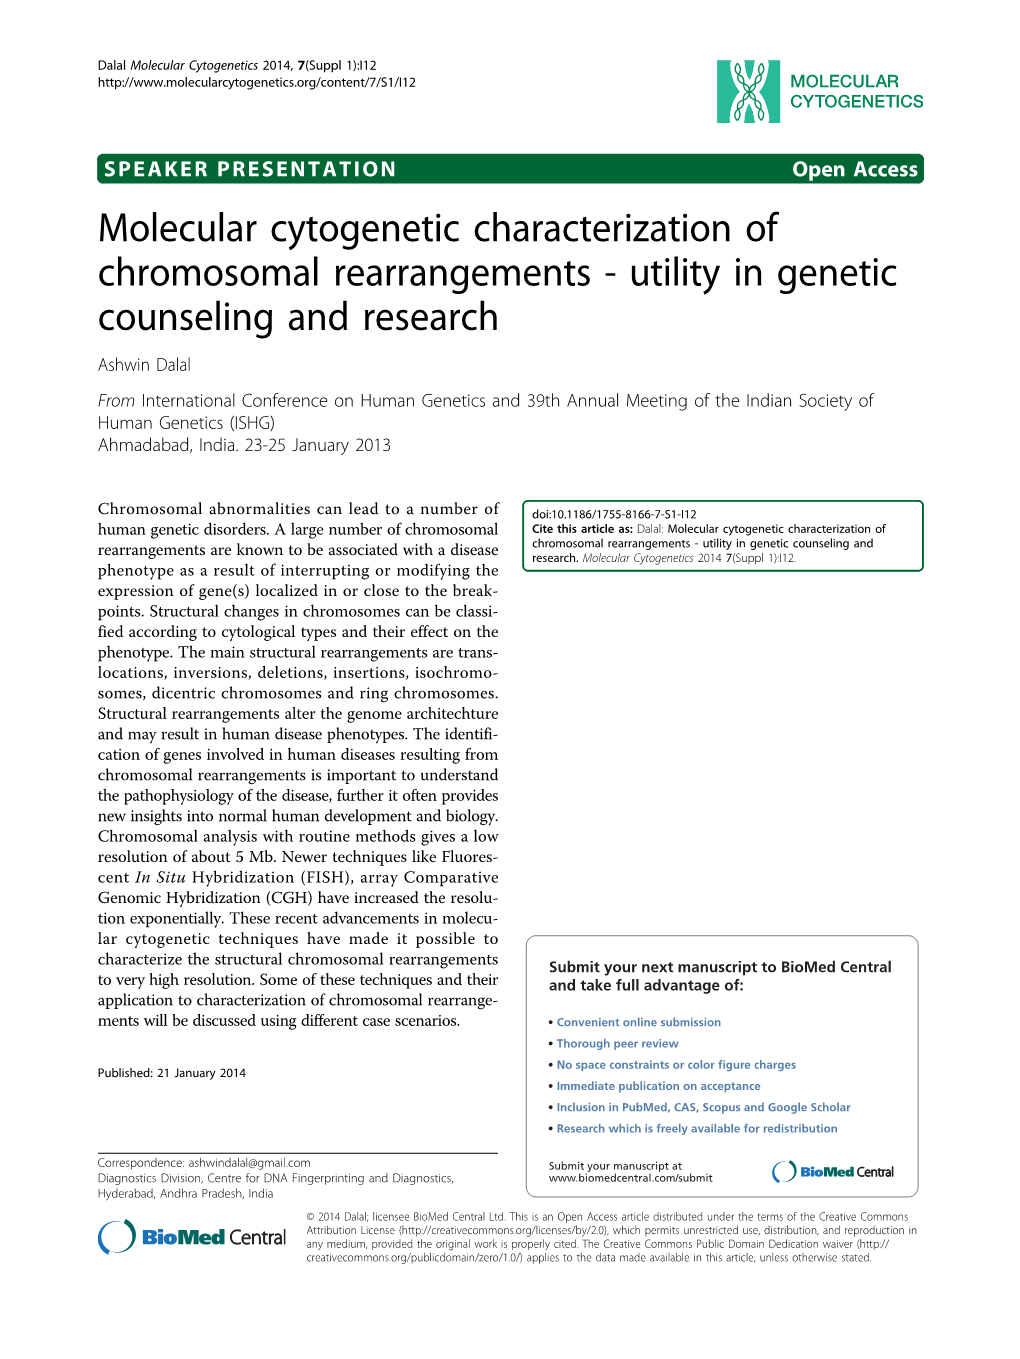 Molecular Cytogenetic Characterization Of